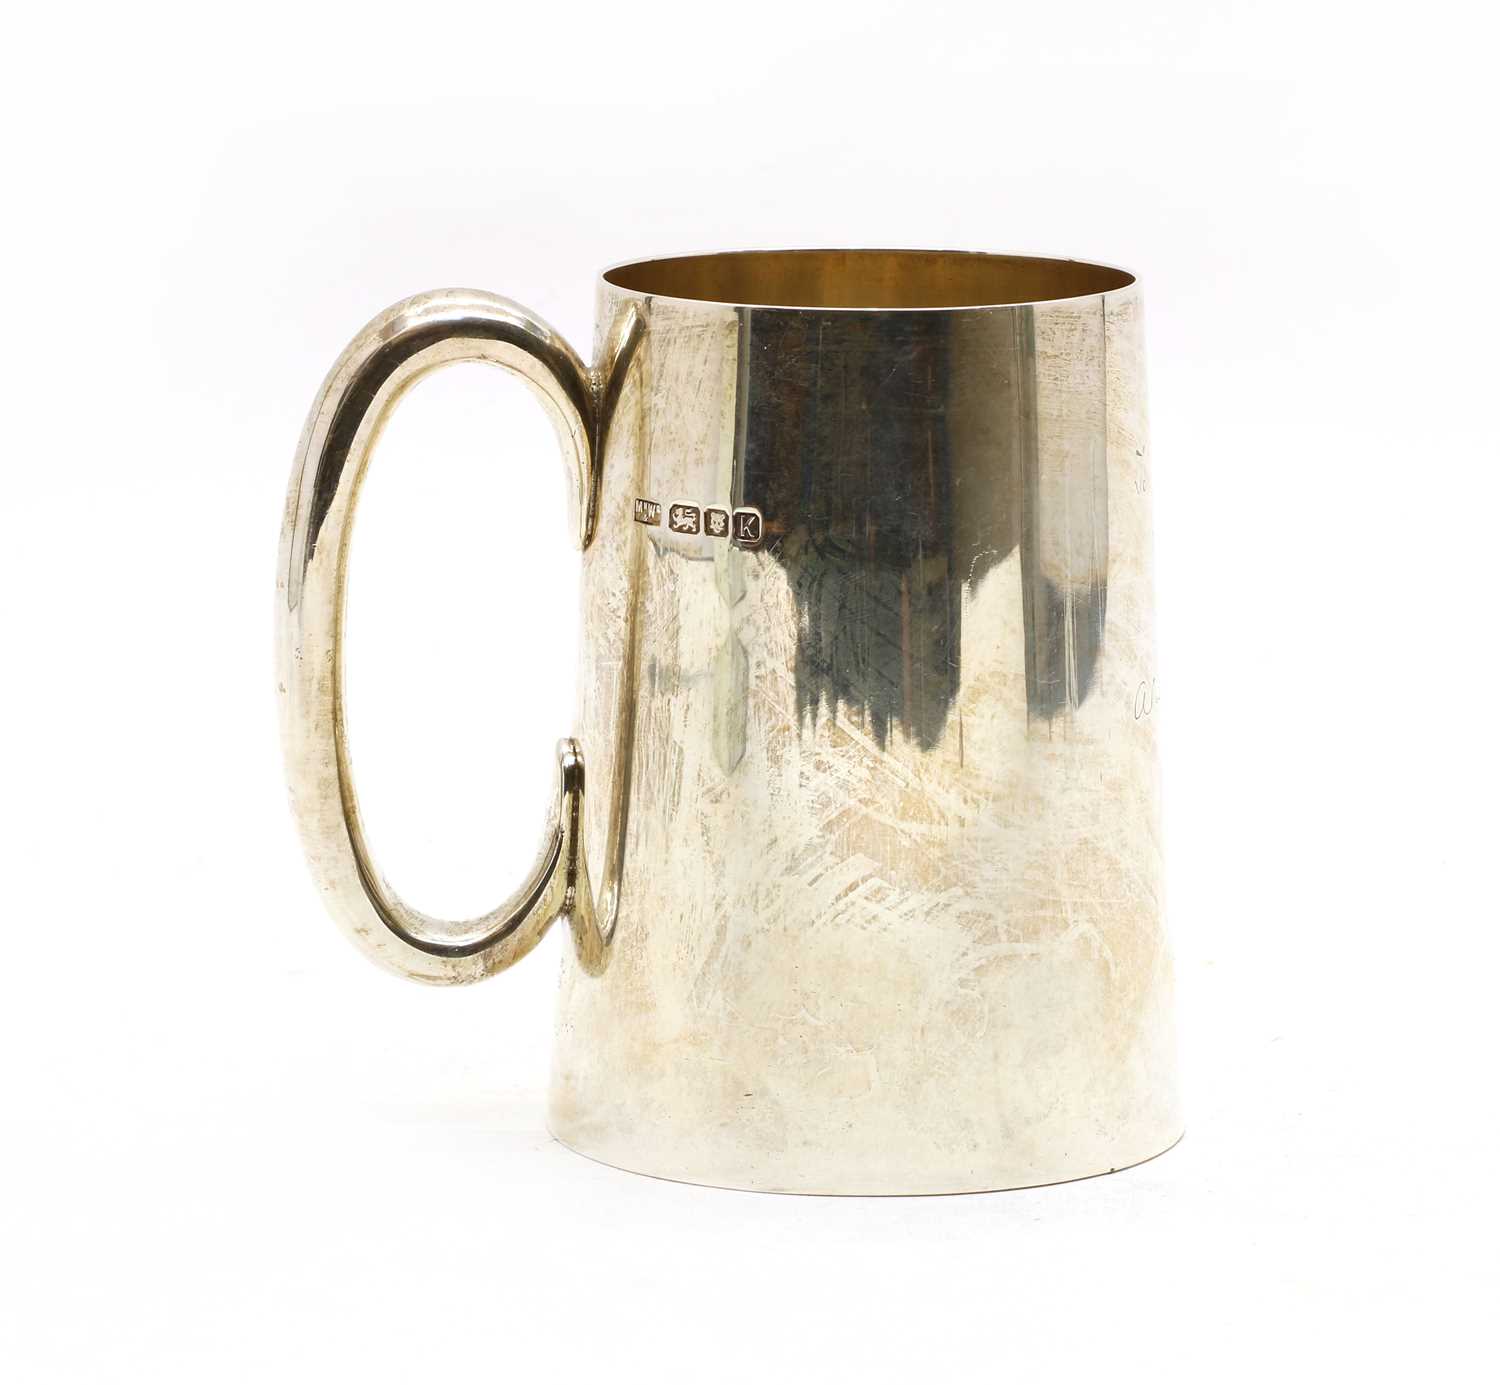 Lot 2 - A modern silver beer mug by Mappin & Webb,